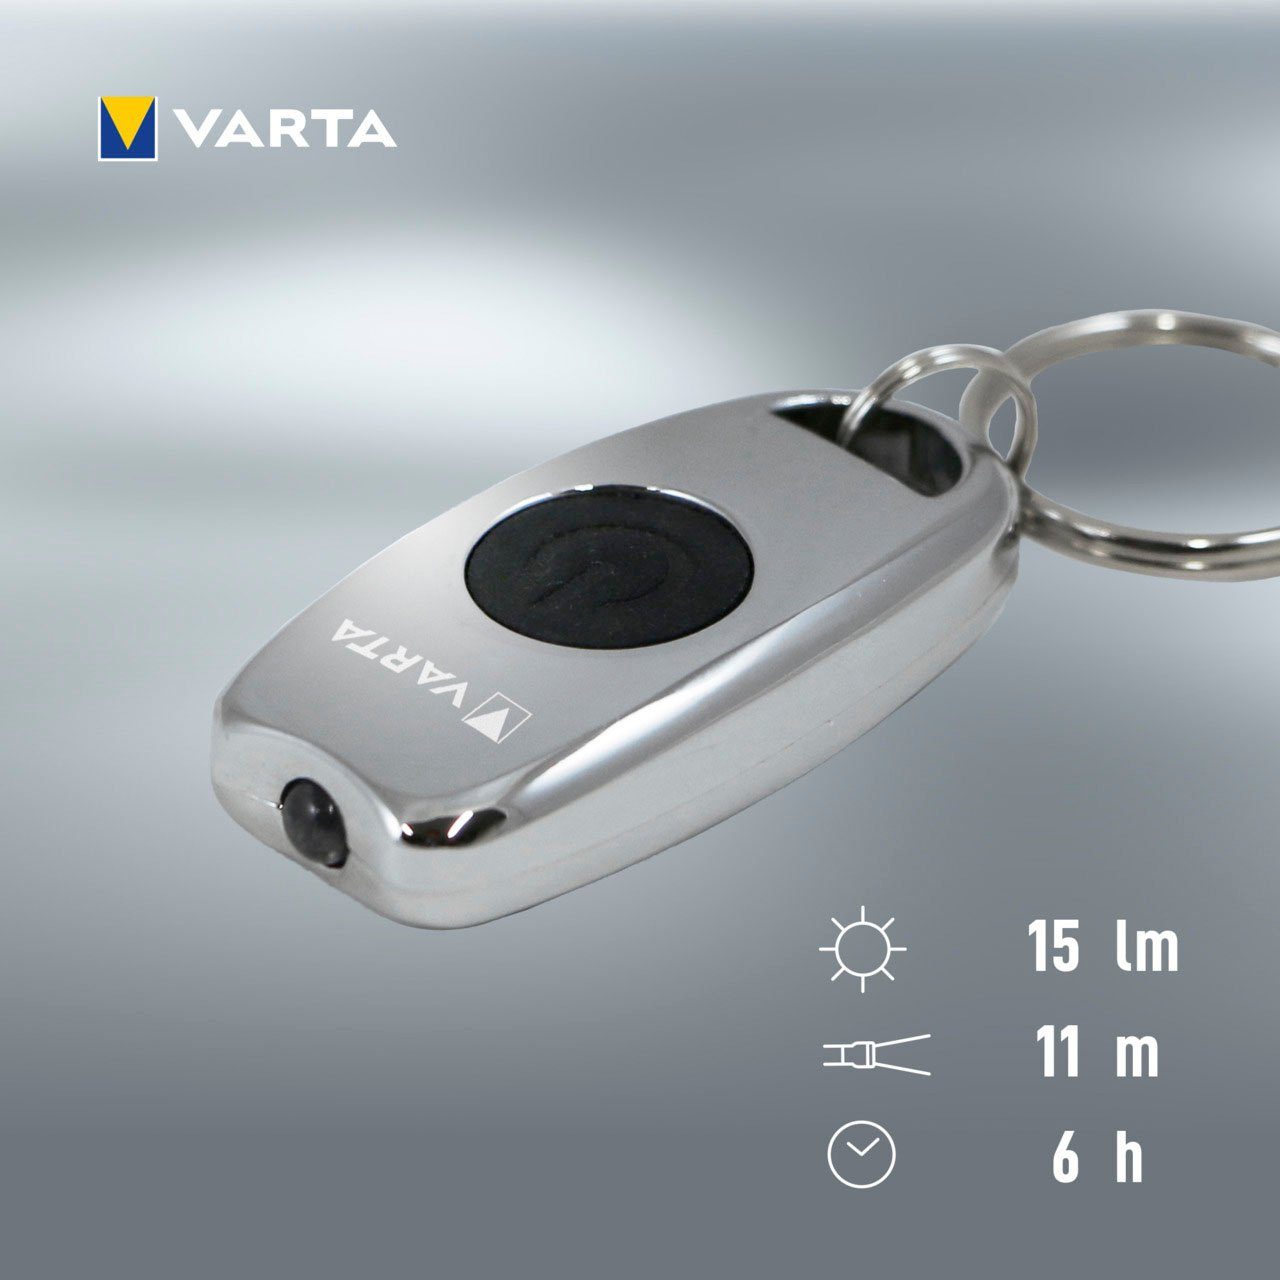 Taschenlampe Chain VARTA Key Light Metal